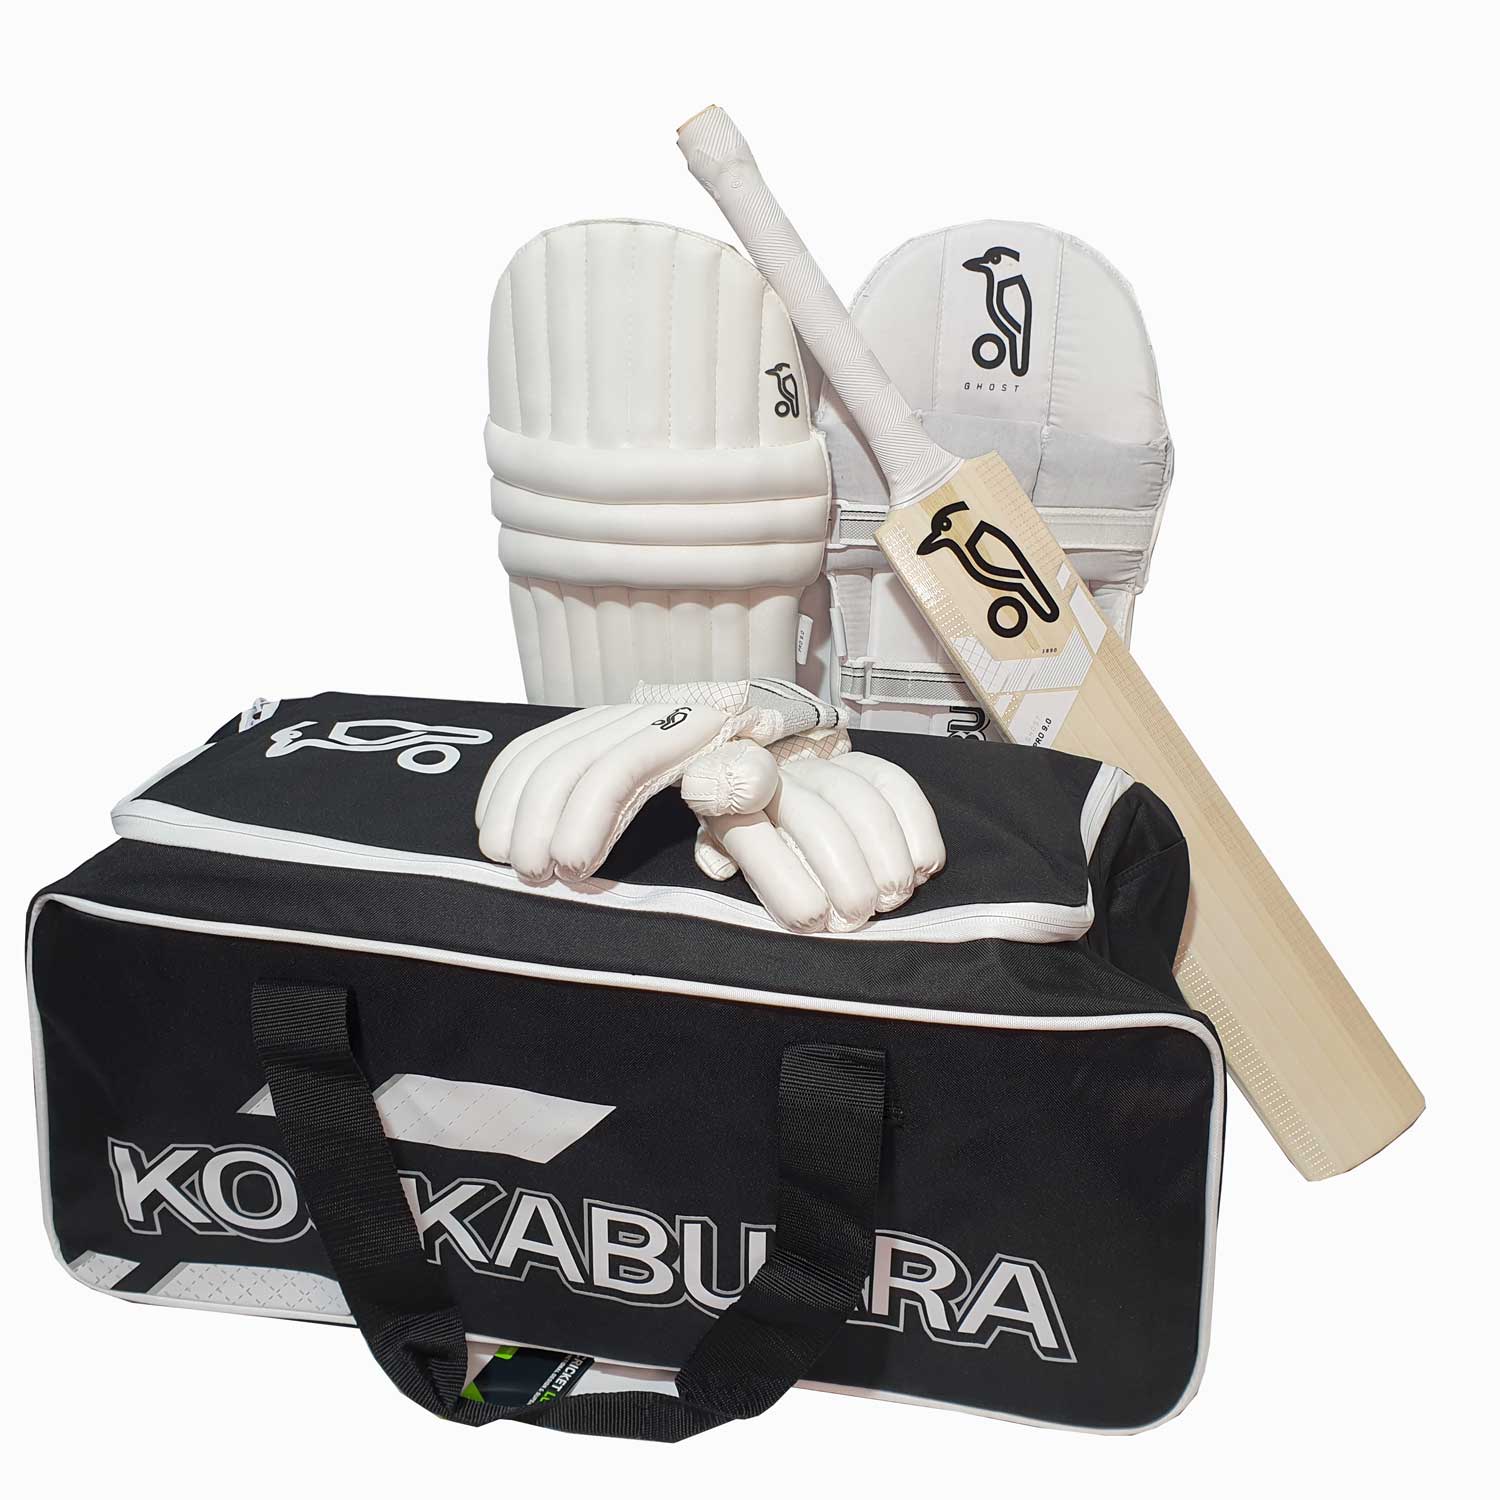 Kookaburra 9.0 Junior Cricket Kit - Youth Sizes